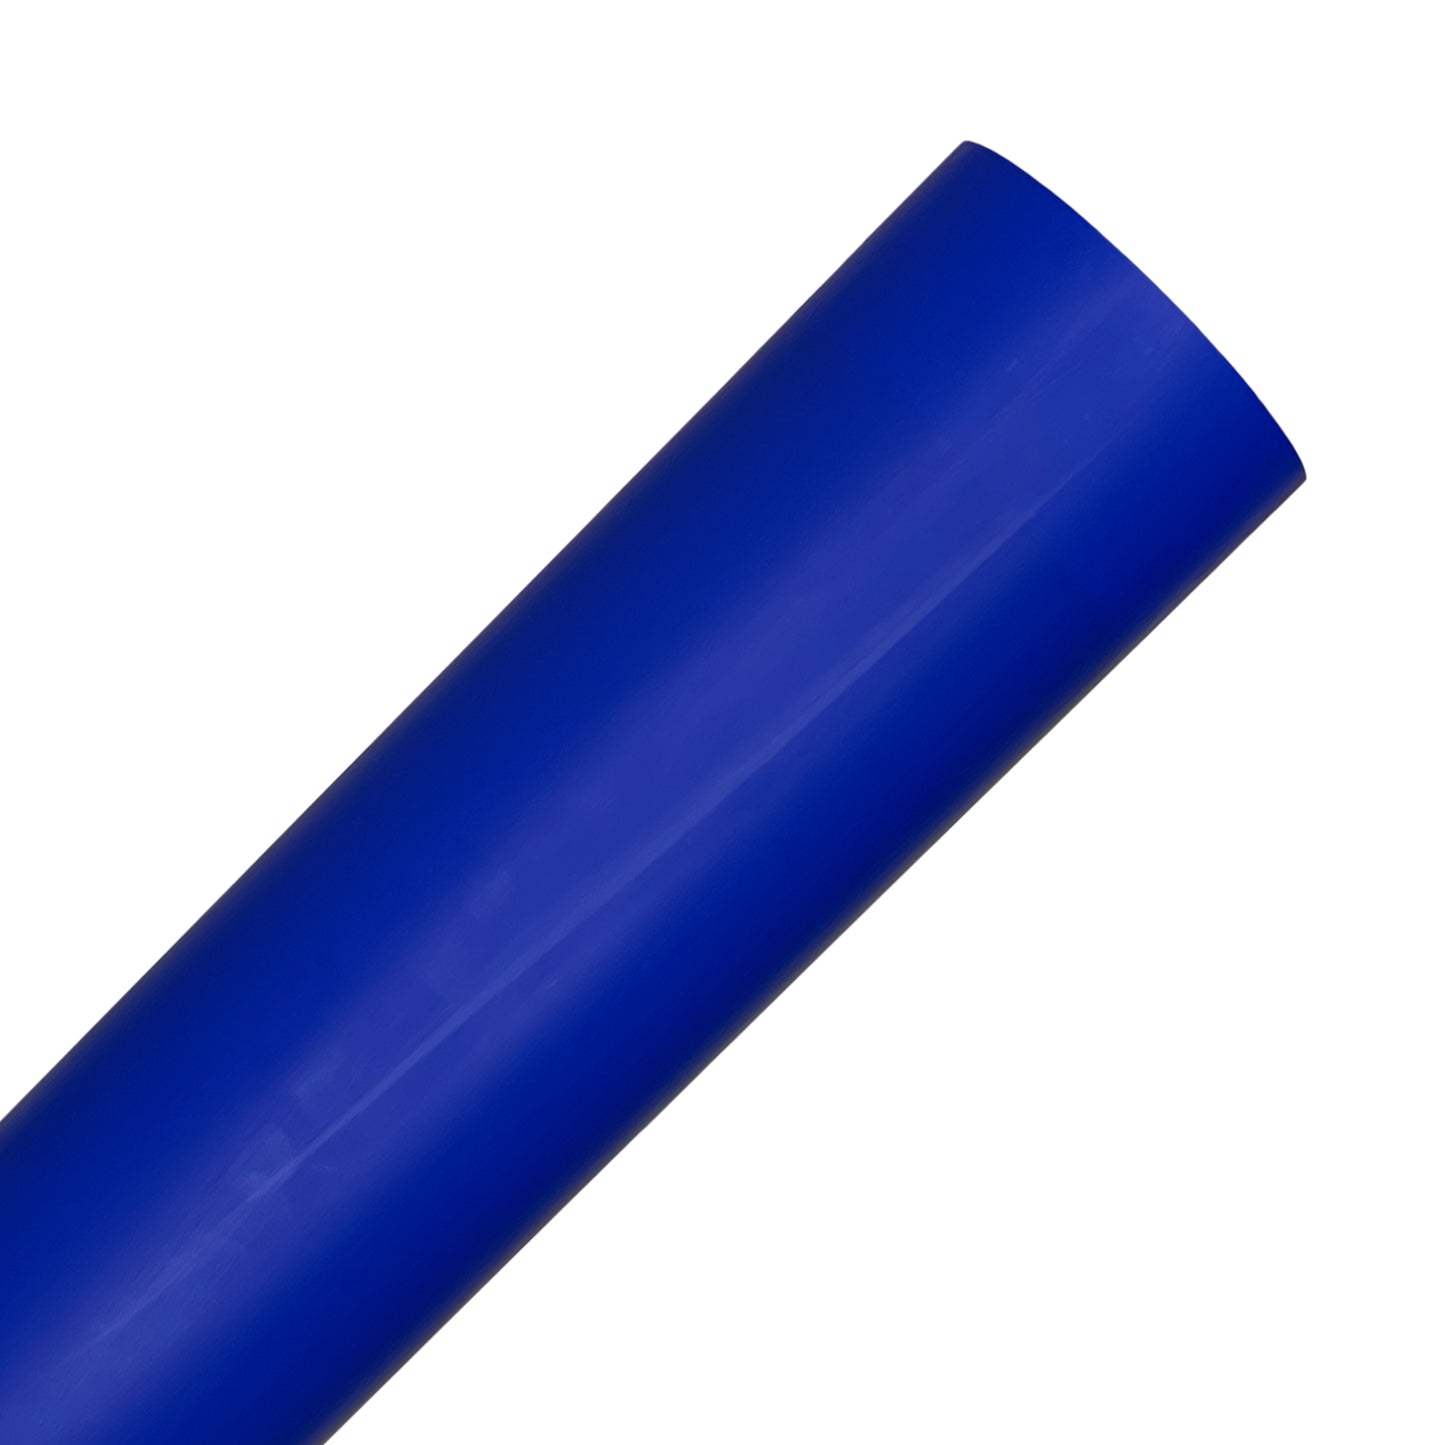 Royal Blue Silicone Heat Transfer Vinyl Rolls By Craftables